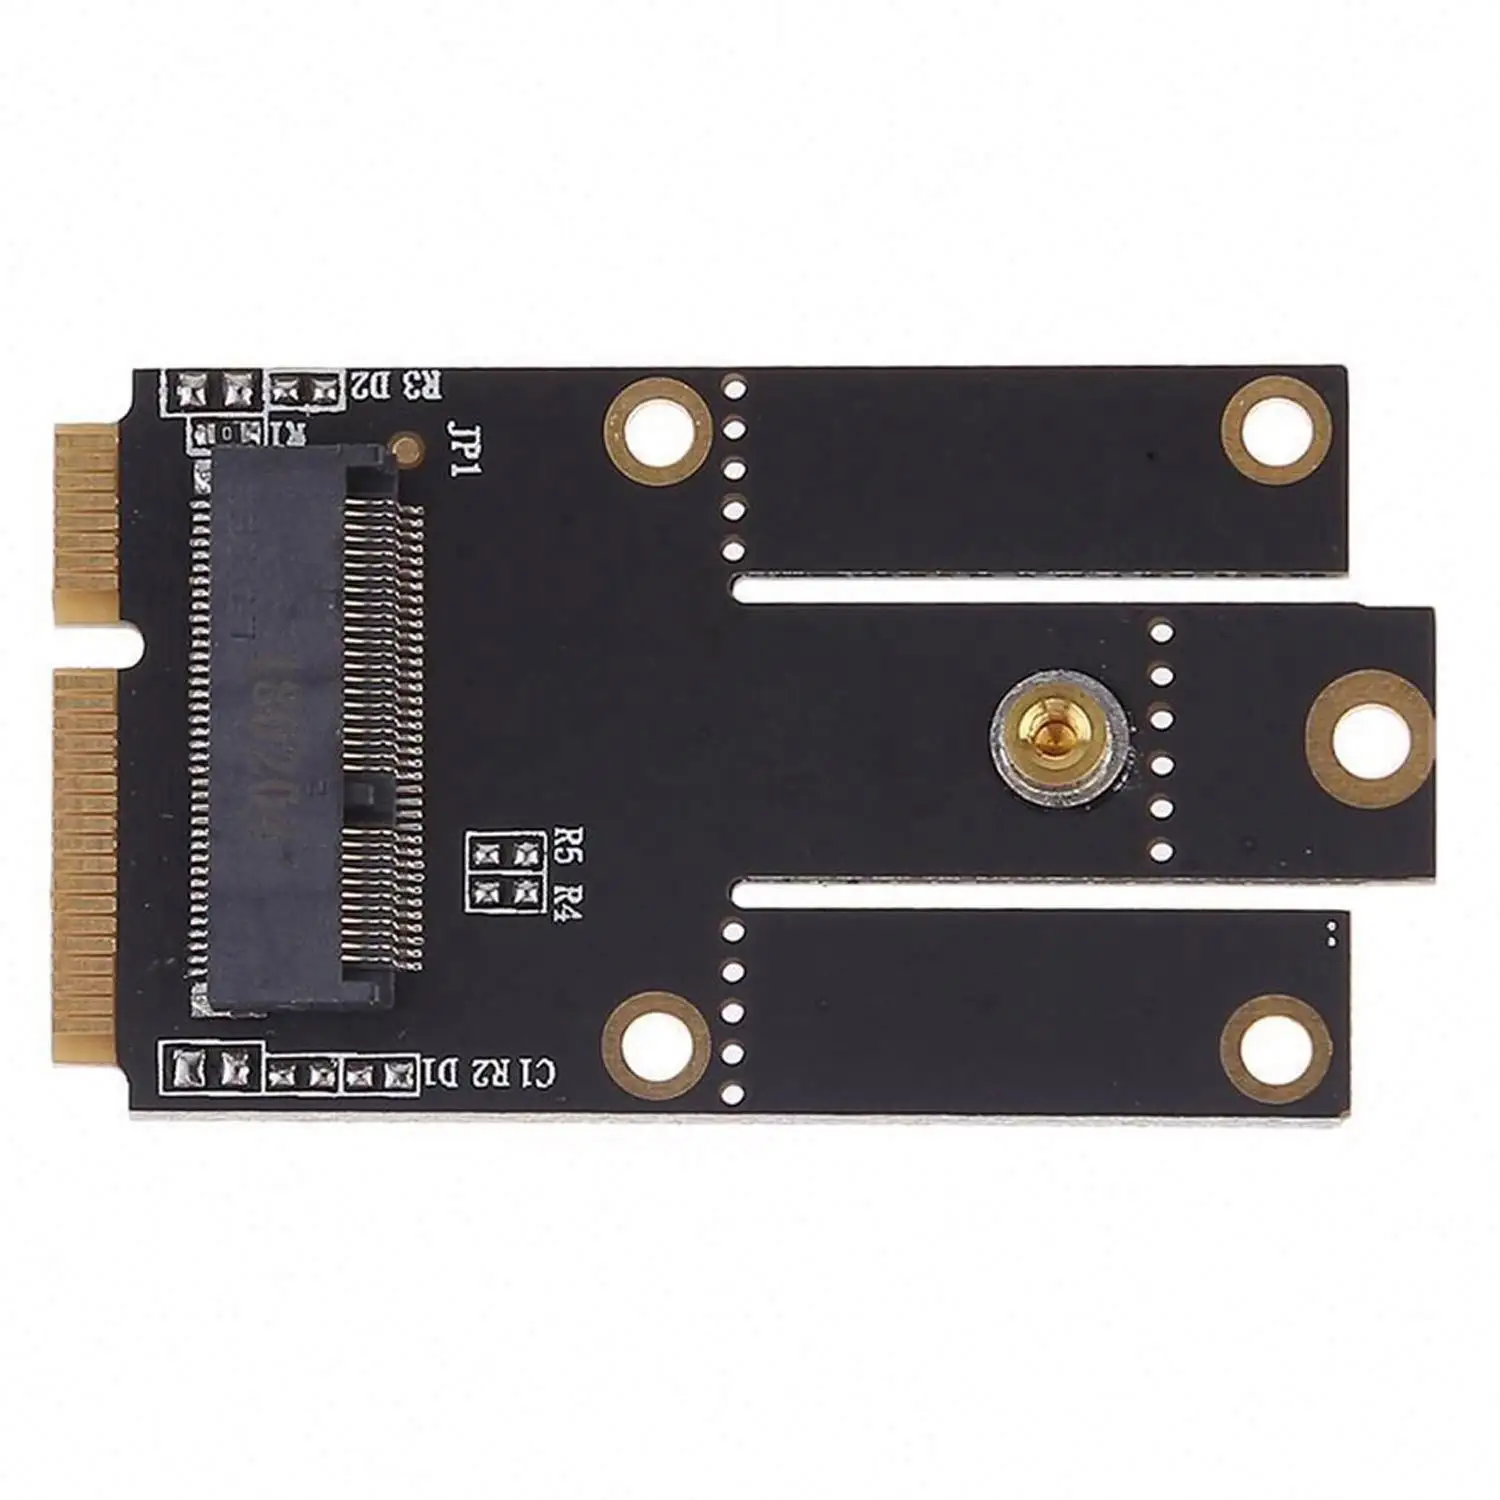 M.2 NGFF-Taste A zu Mini PCI-E PCI Express-Konverter adapter für 9260 8265 7260 AC Wifi Wireless-Karte für Laptops